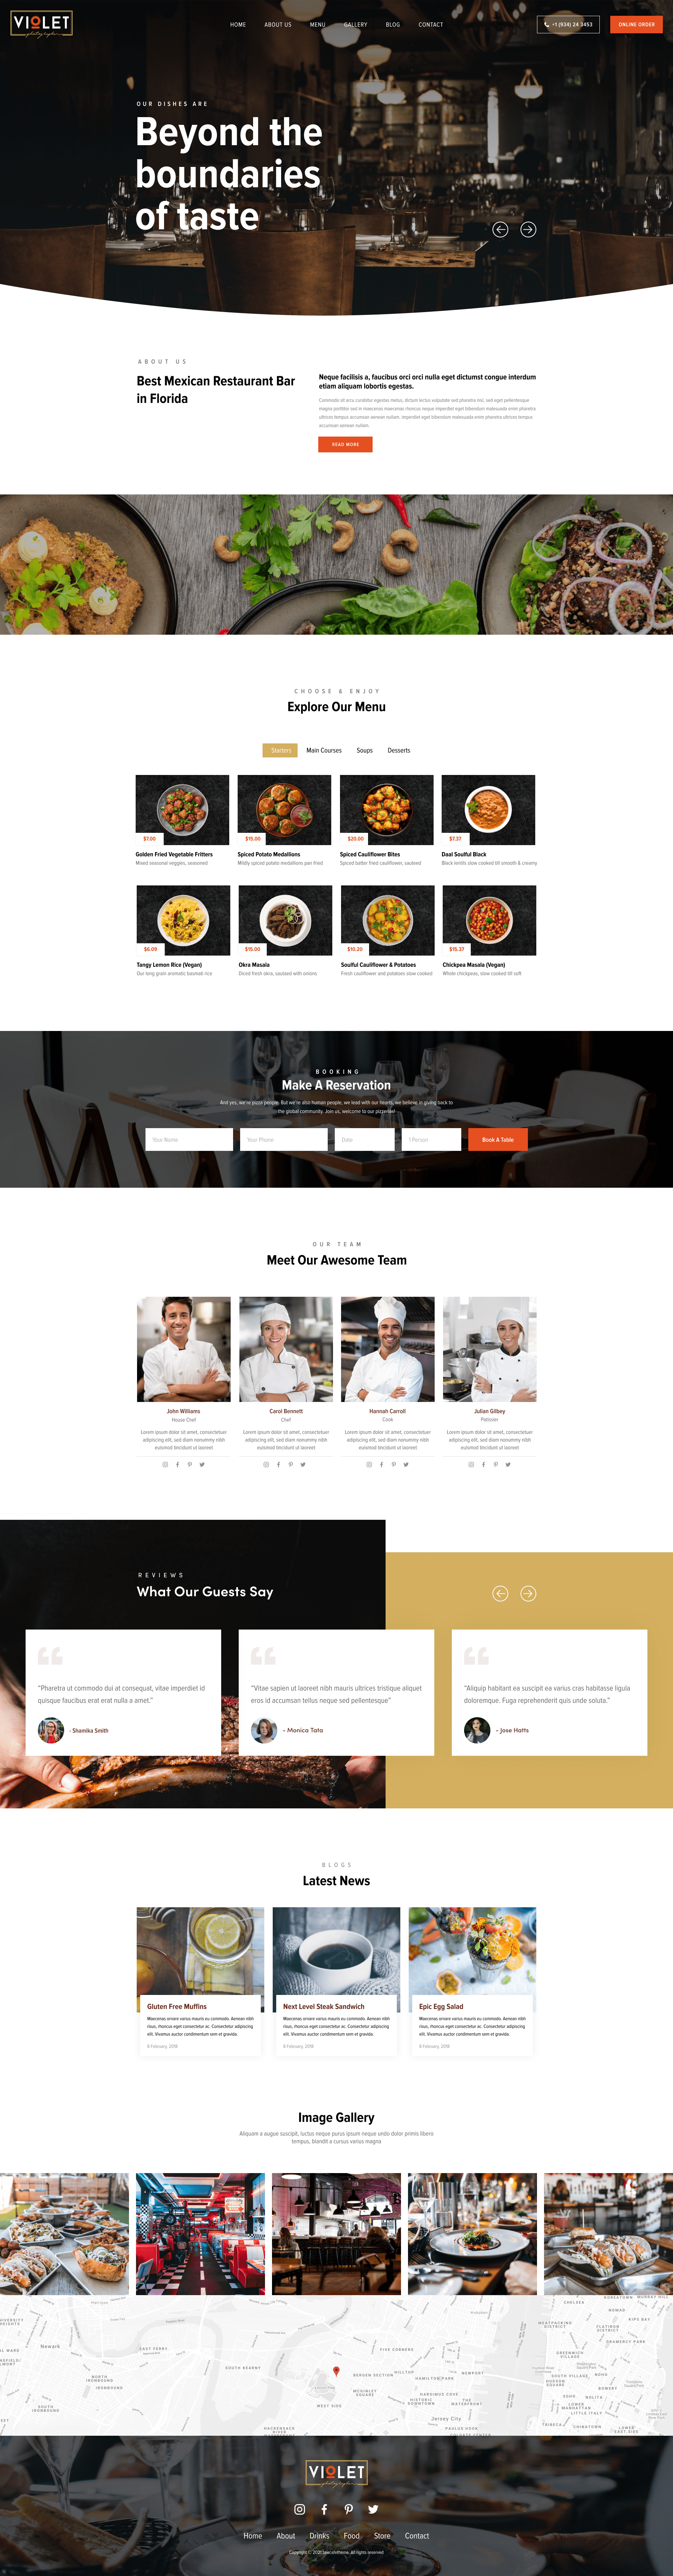 Web Design Examples for Restaurants